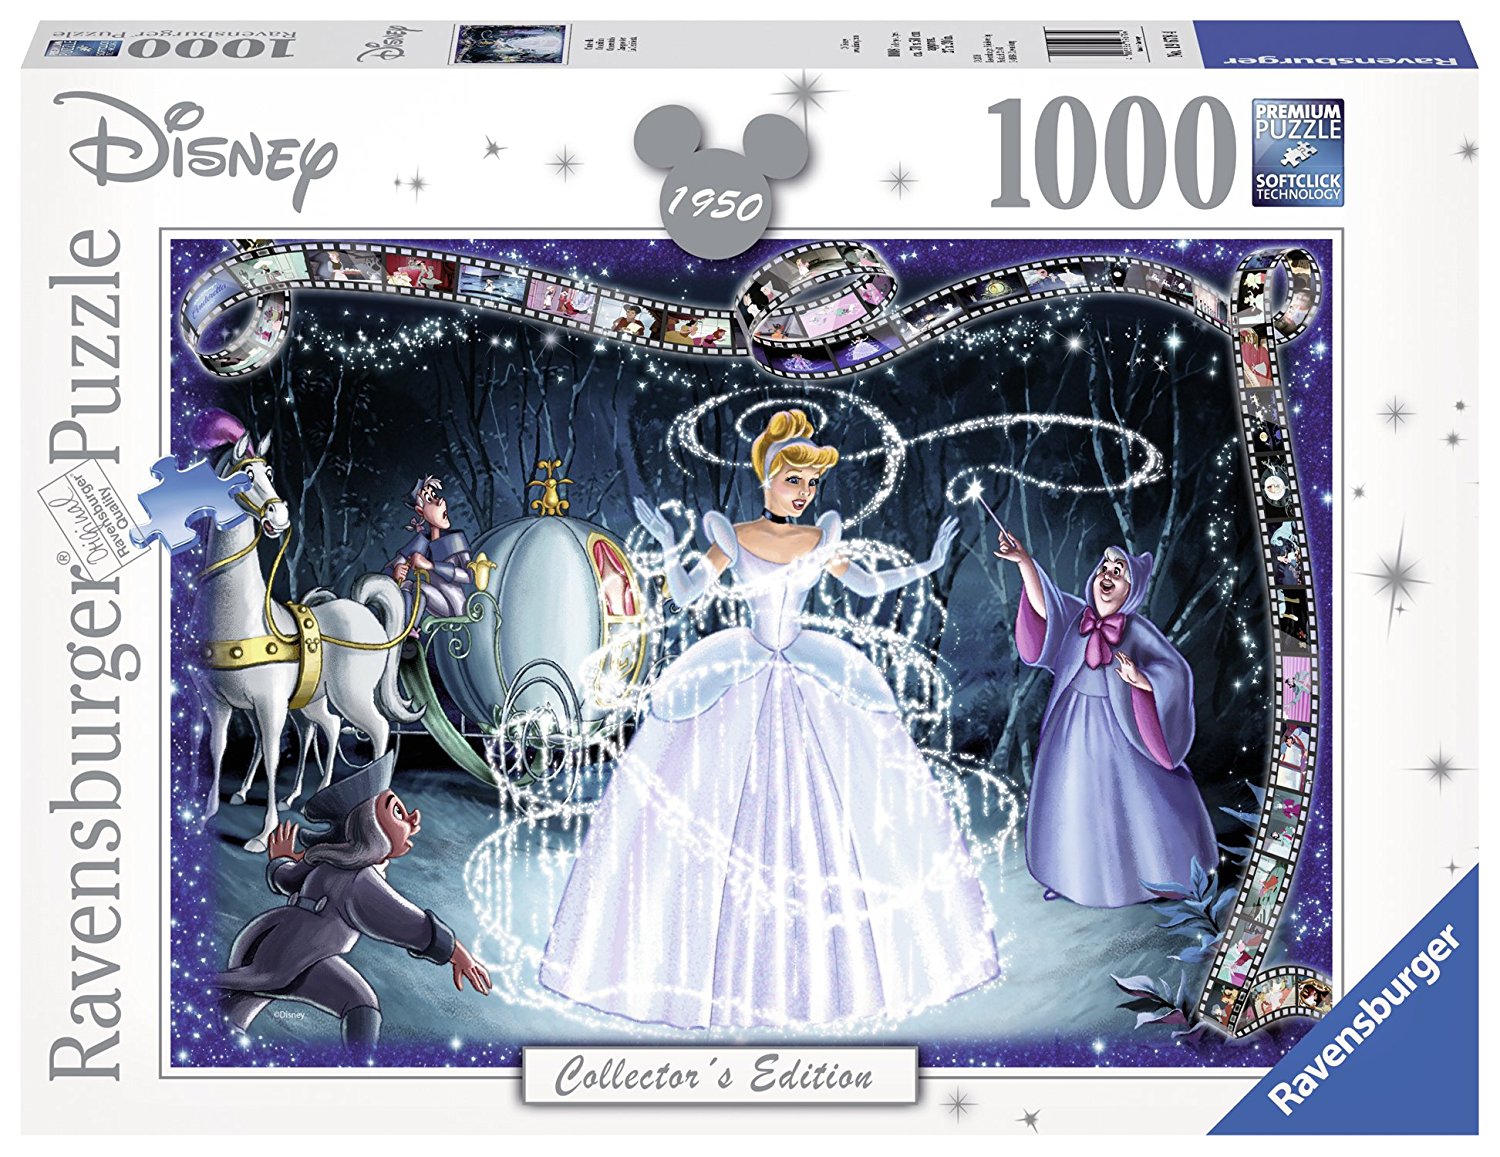 Disney Collector'S Edition ' Cinderella' 1000 Piece Jigsaw Puzzle Game